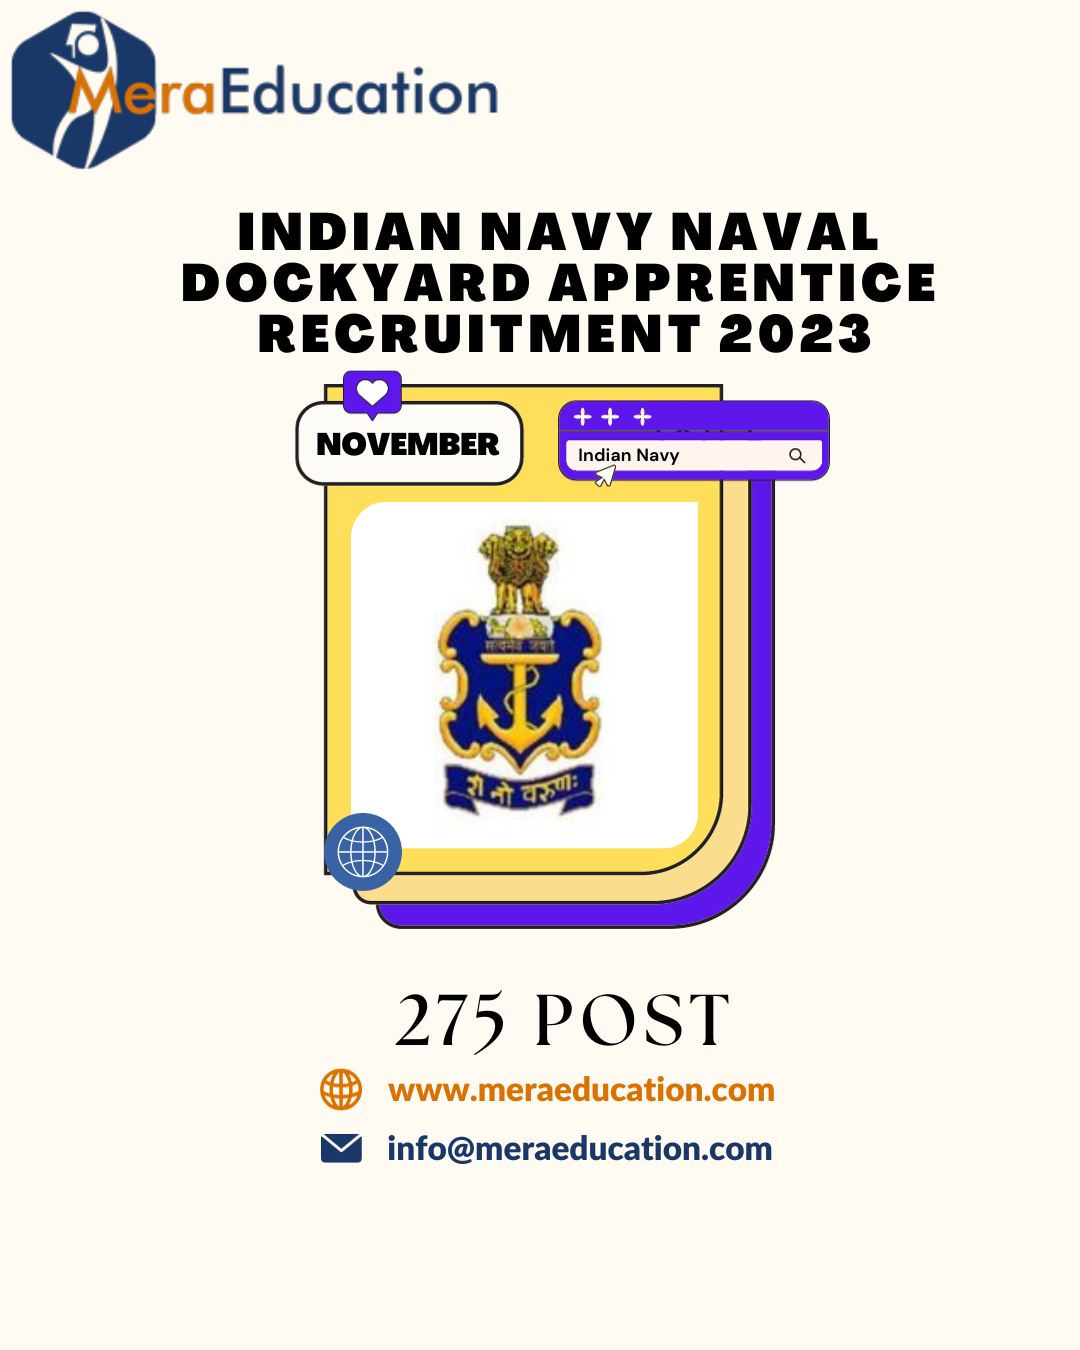 Indian Navy Naval Dockyard Apprentice MeraEducation